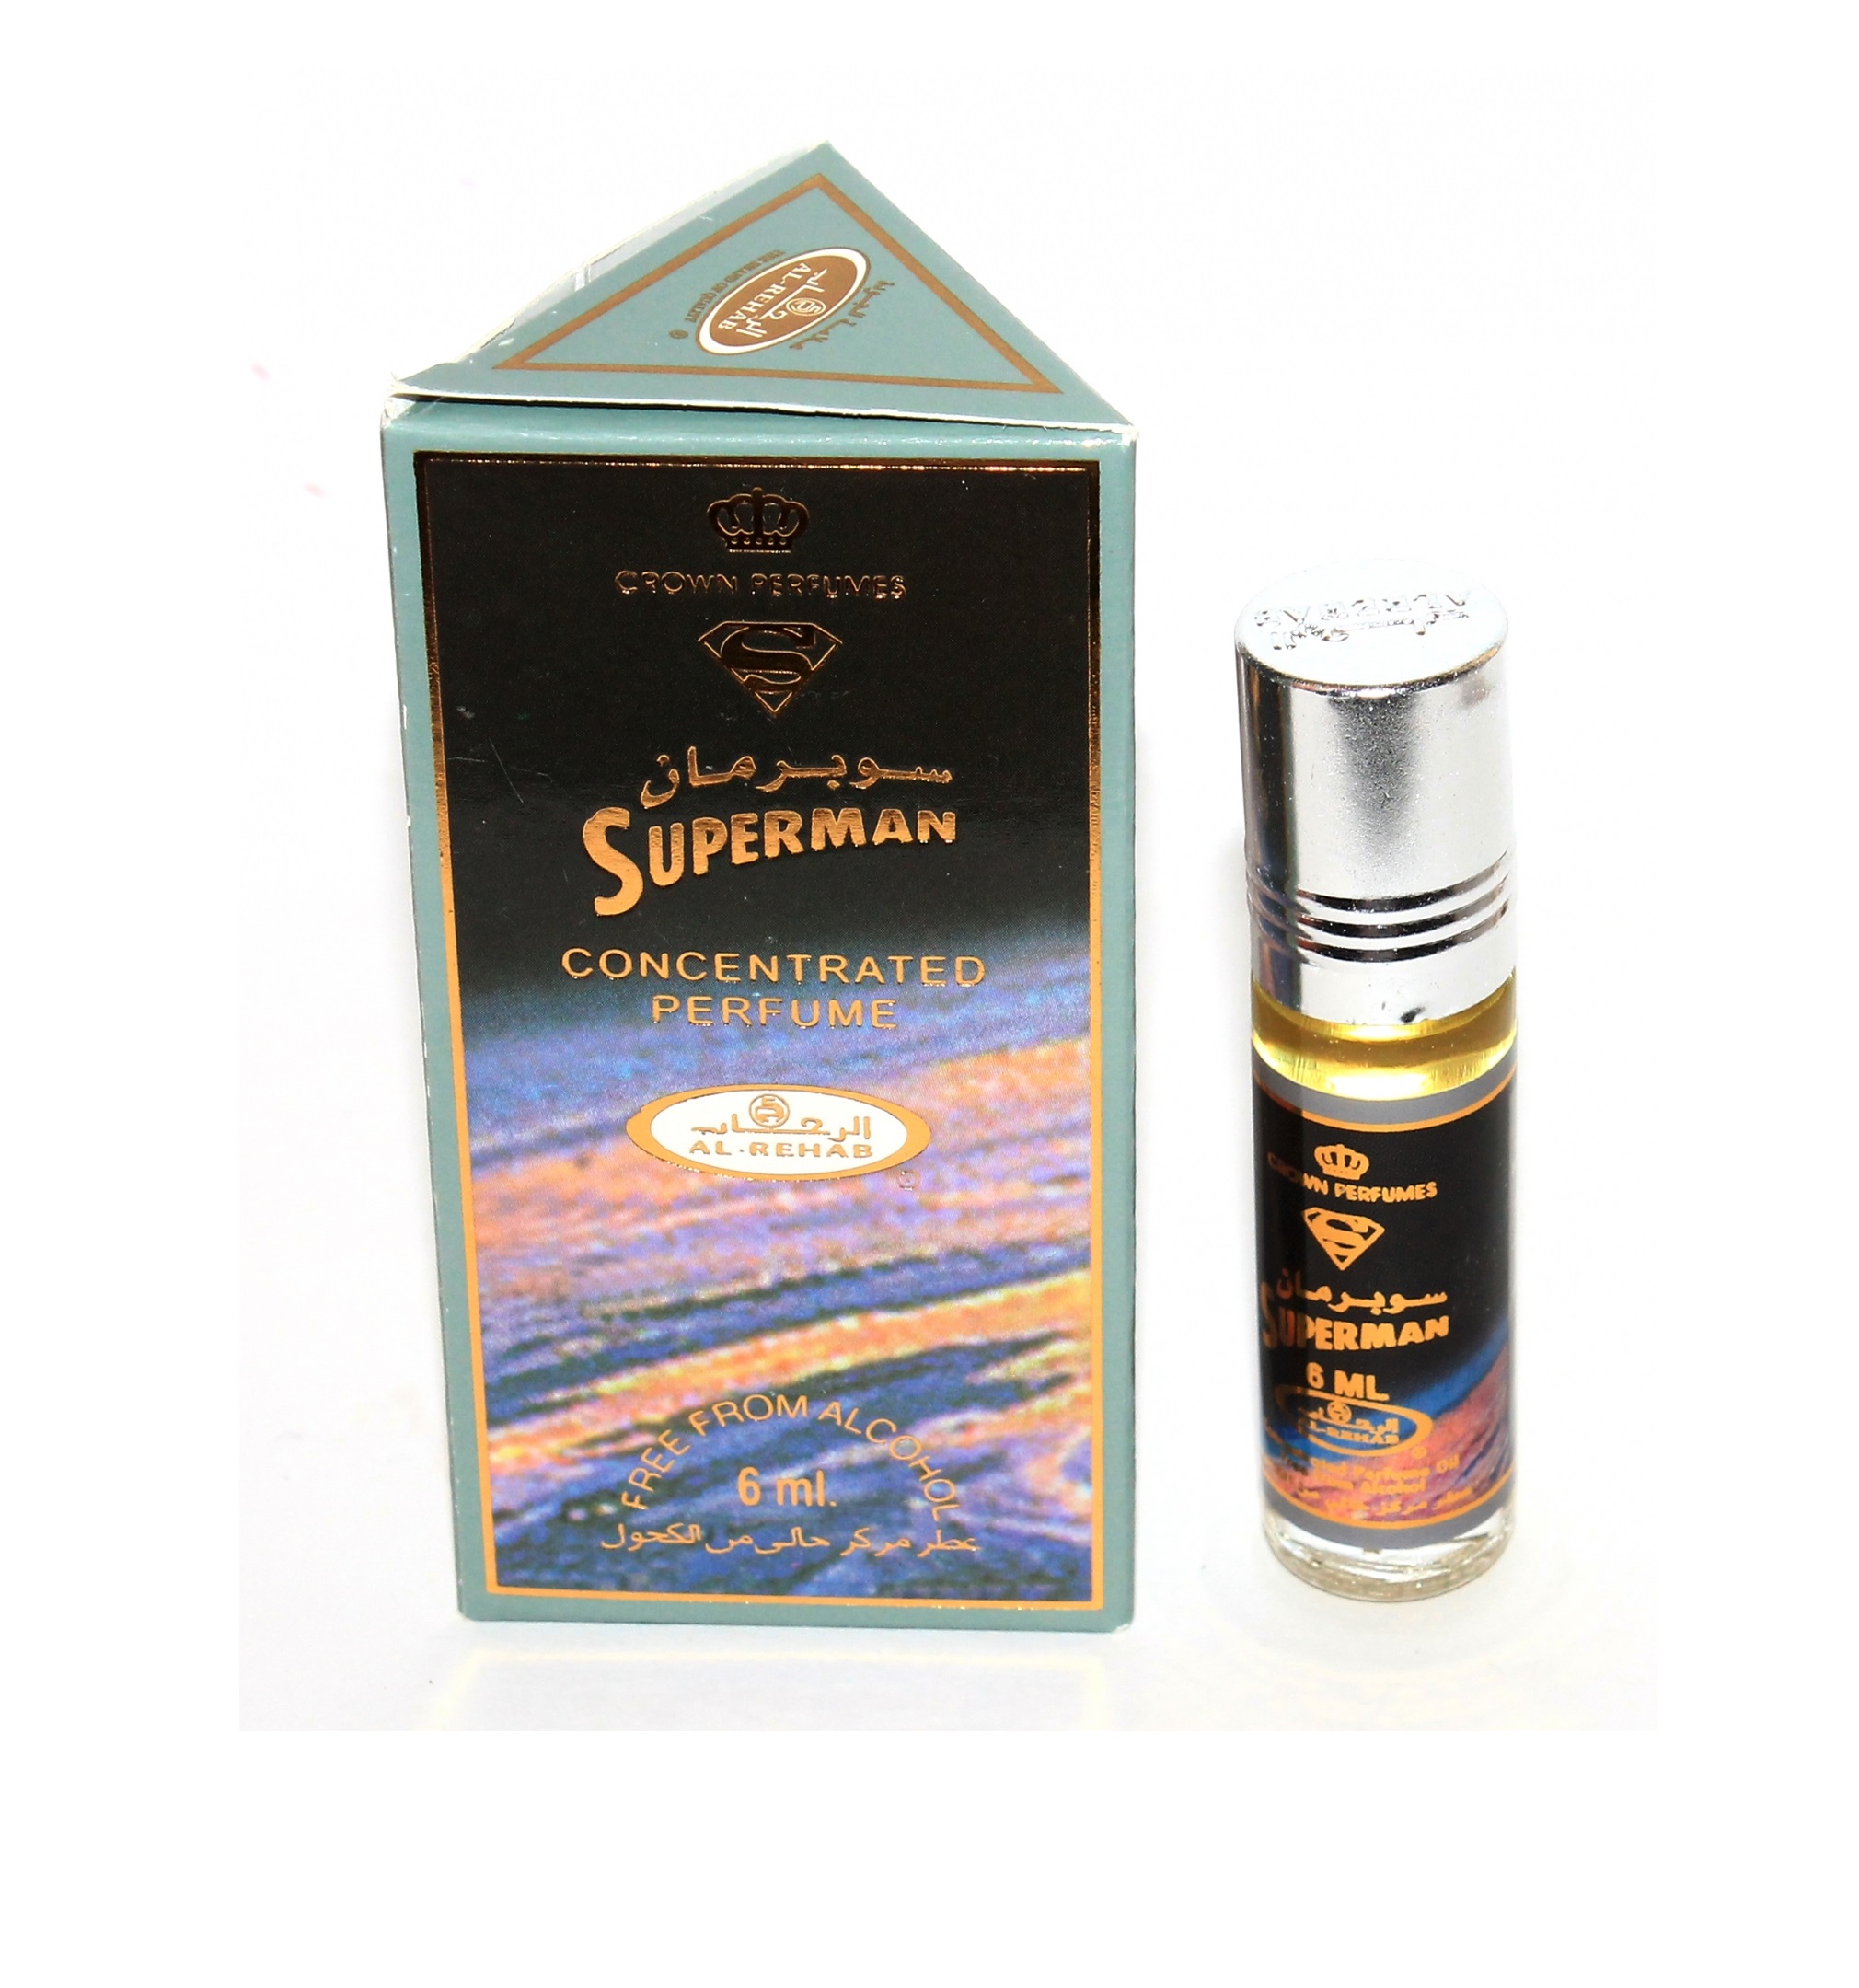 Al-Rehab Concentrated Perfume SUPERMAN (Мужские масляные арабские духи СУПЕРМЕН, Аль-Рехаб), 6 мл.